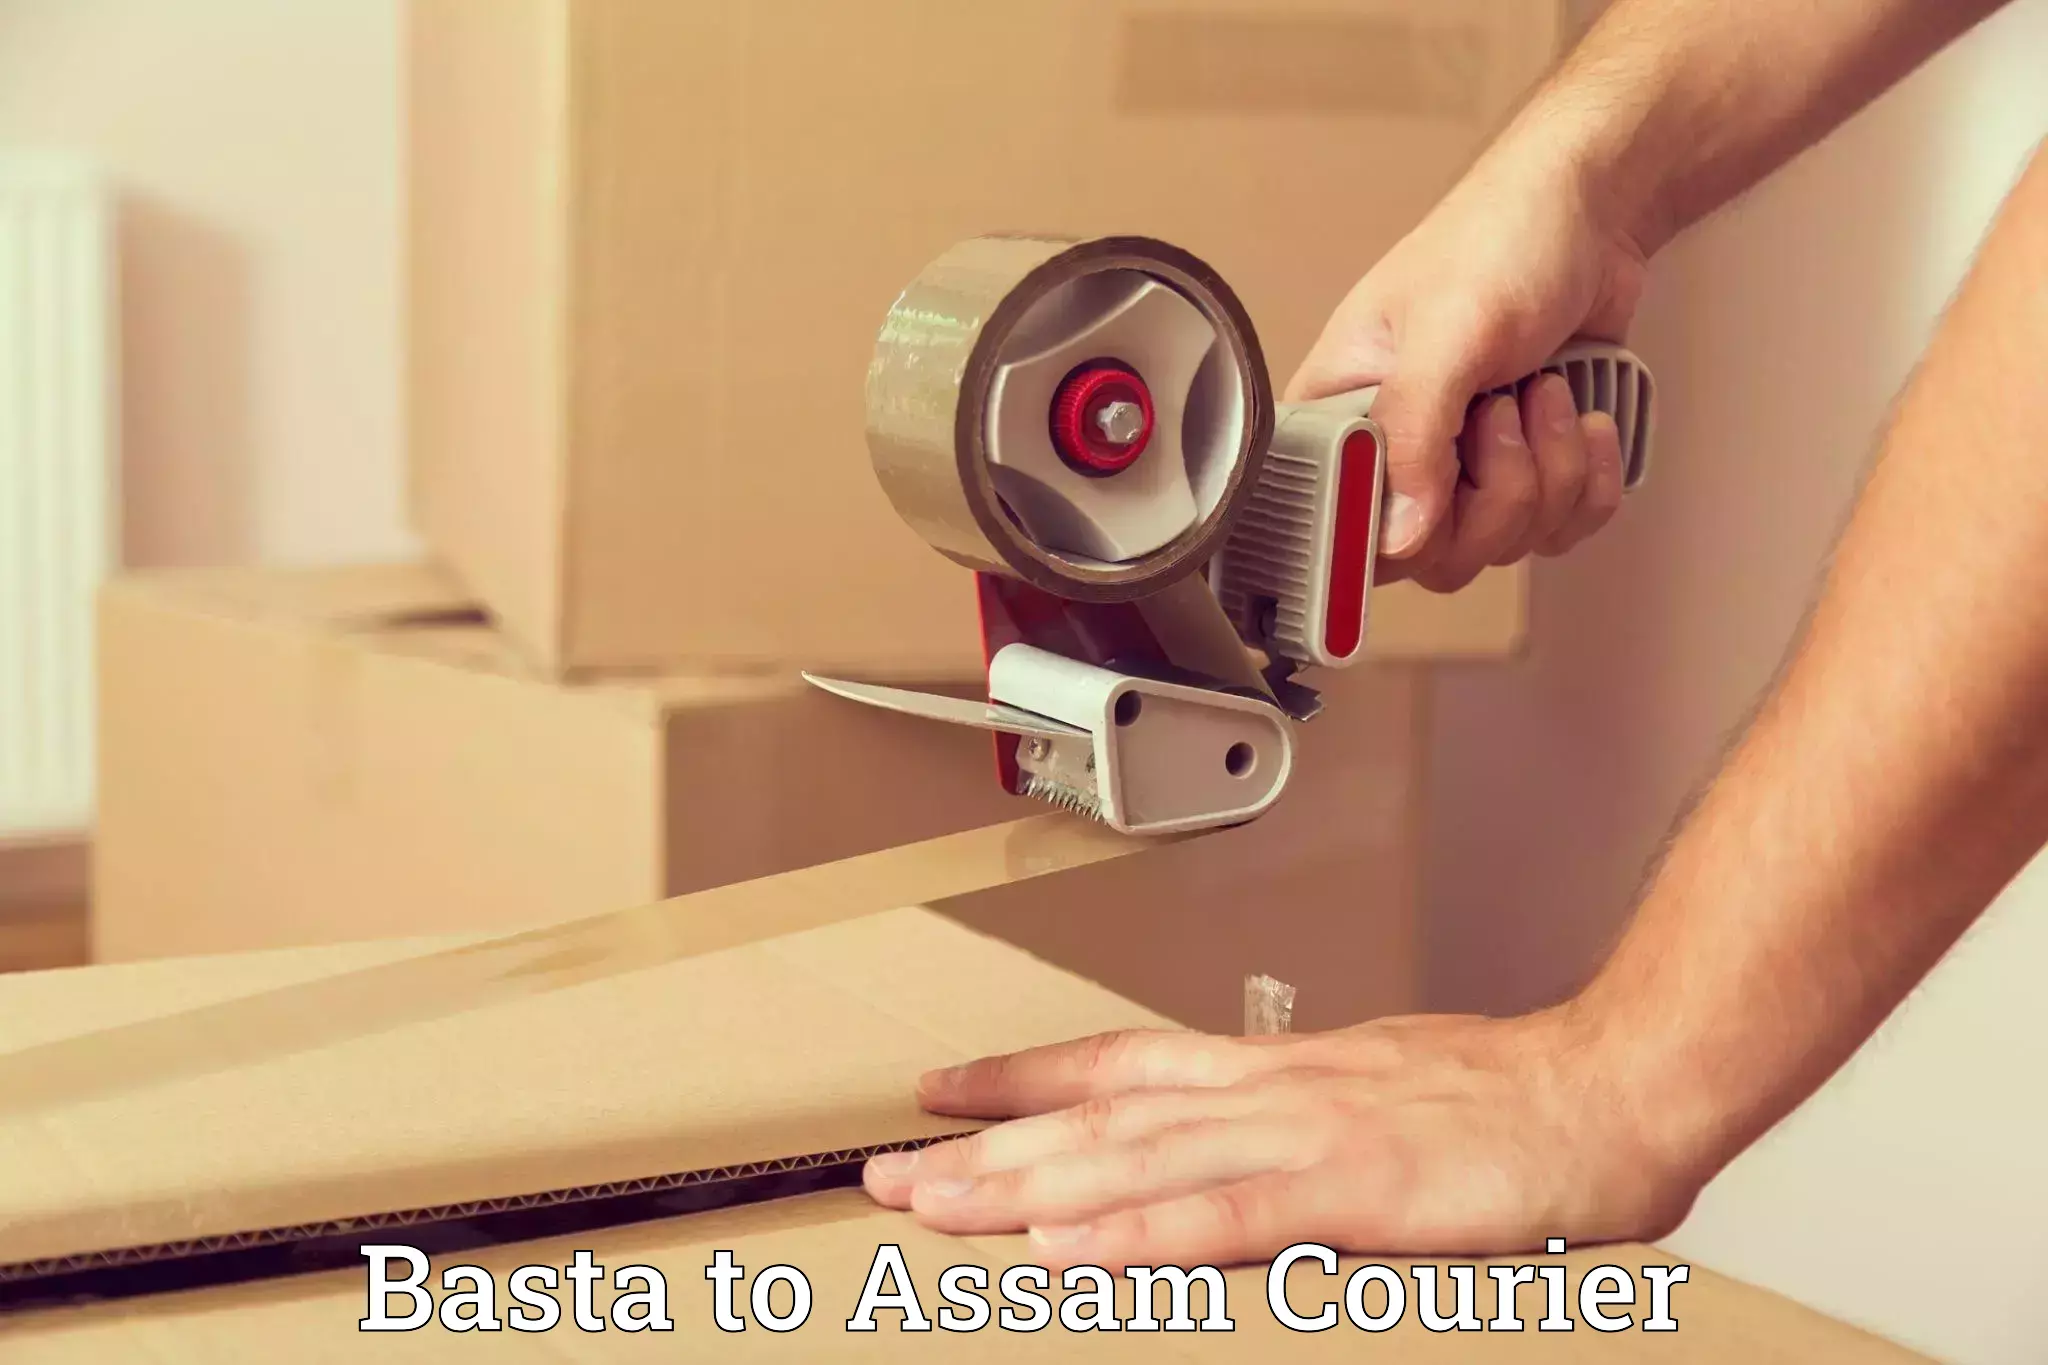 Professional moving company Basta to Assam